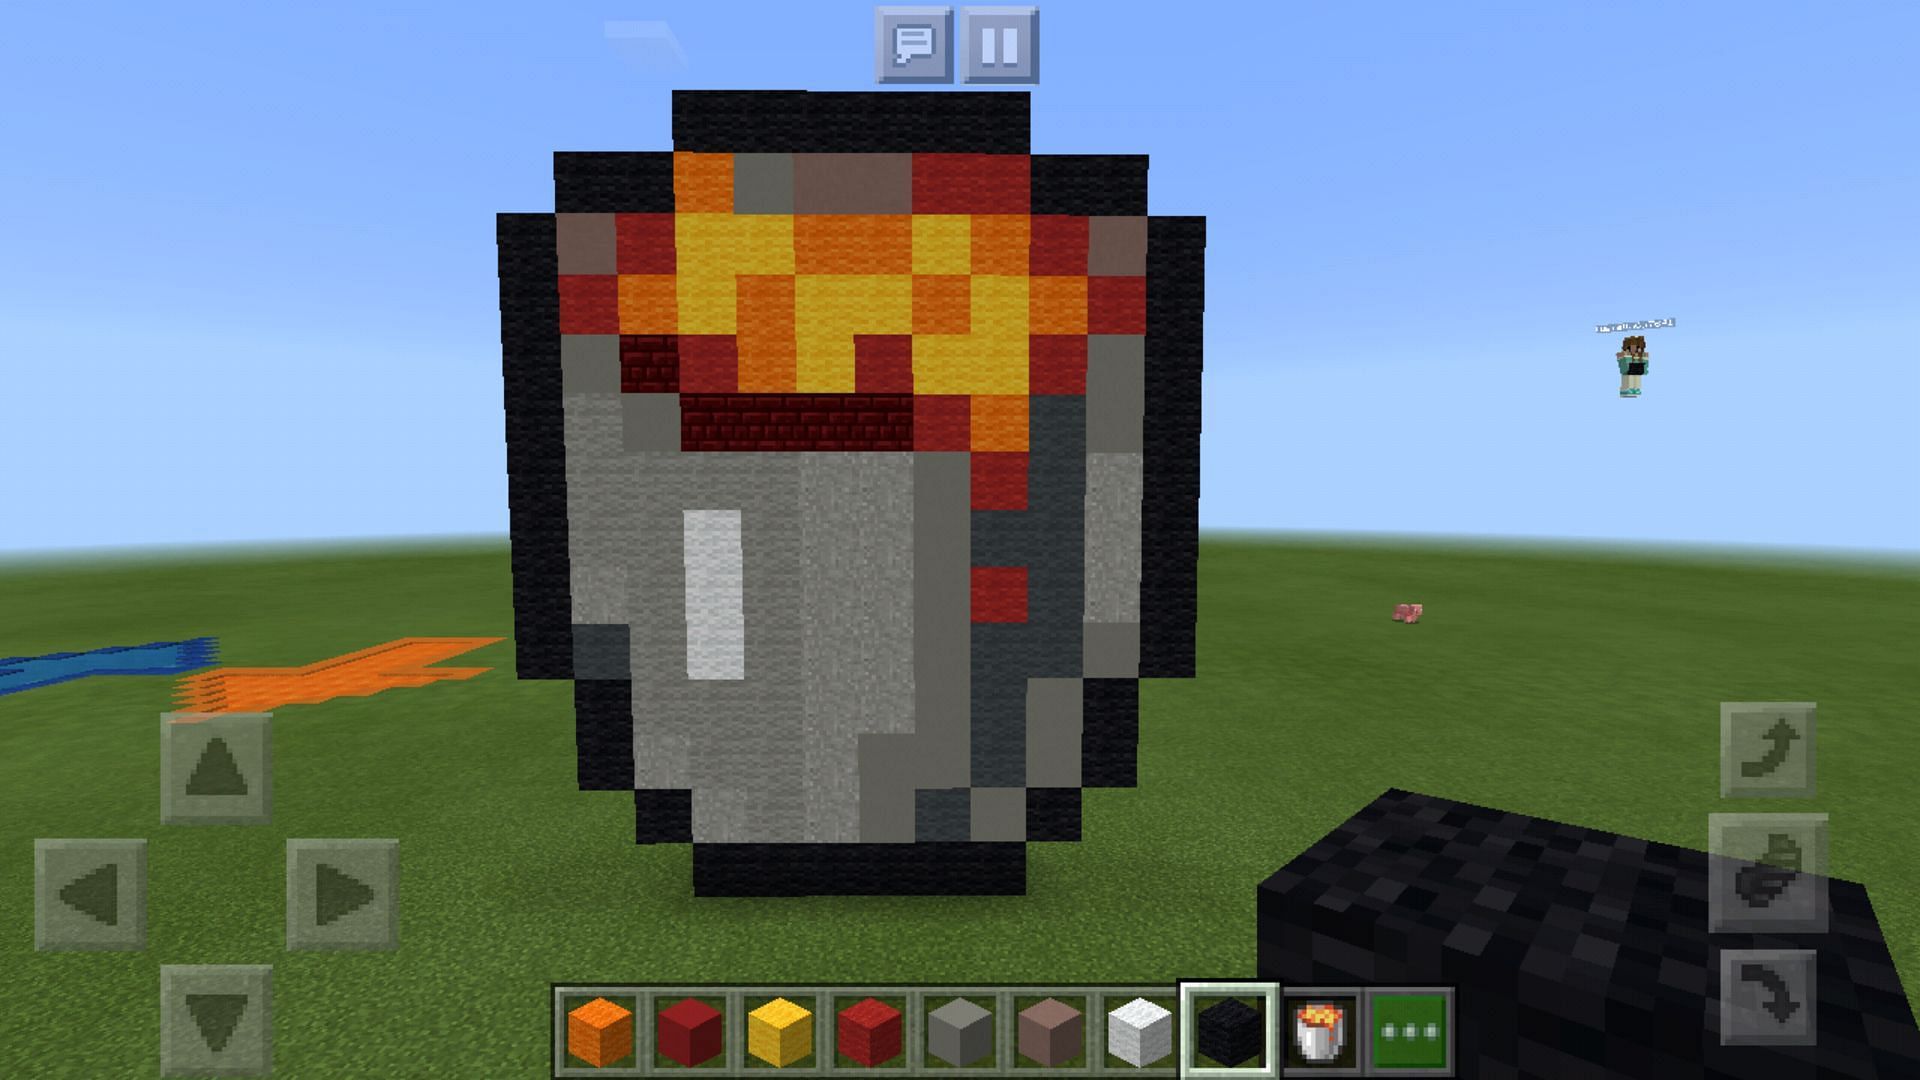 Rinse and repeat lava bucket technique to slowly remove lava in Minecraft (Image via Reddit/u/Mexican-poo-poo-head)